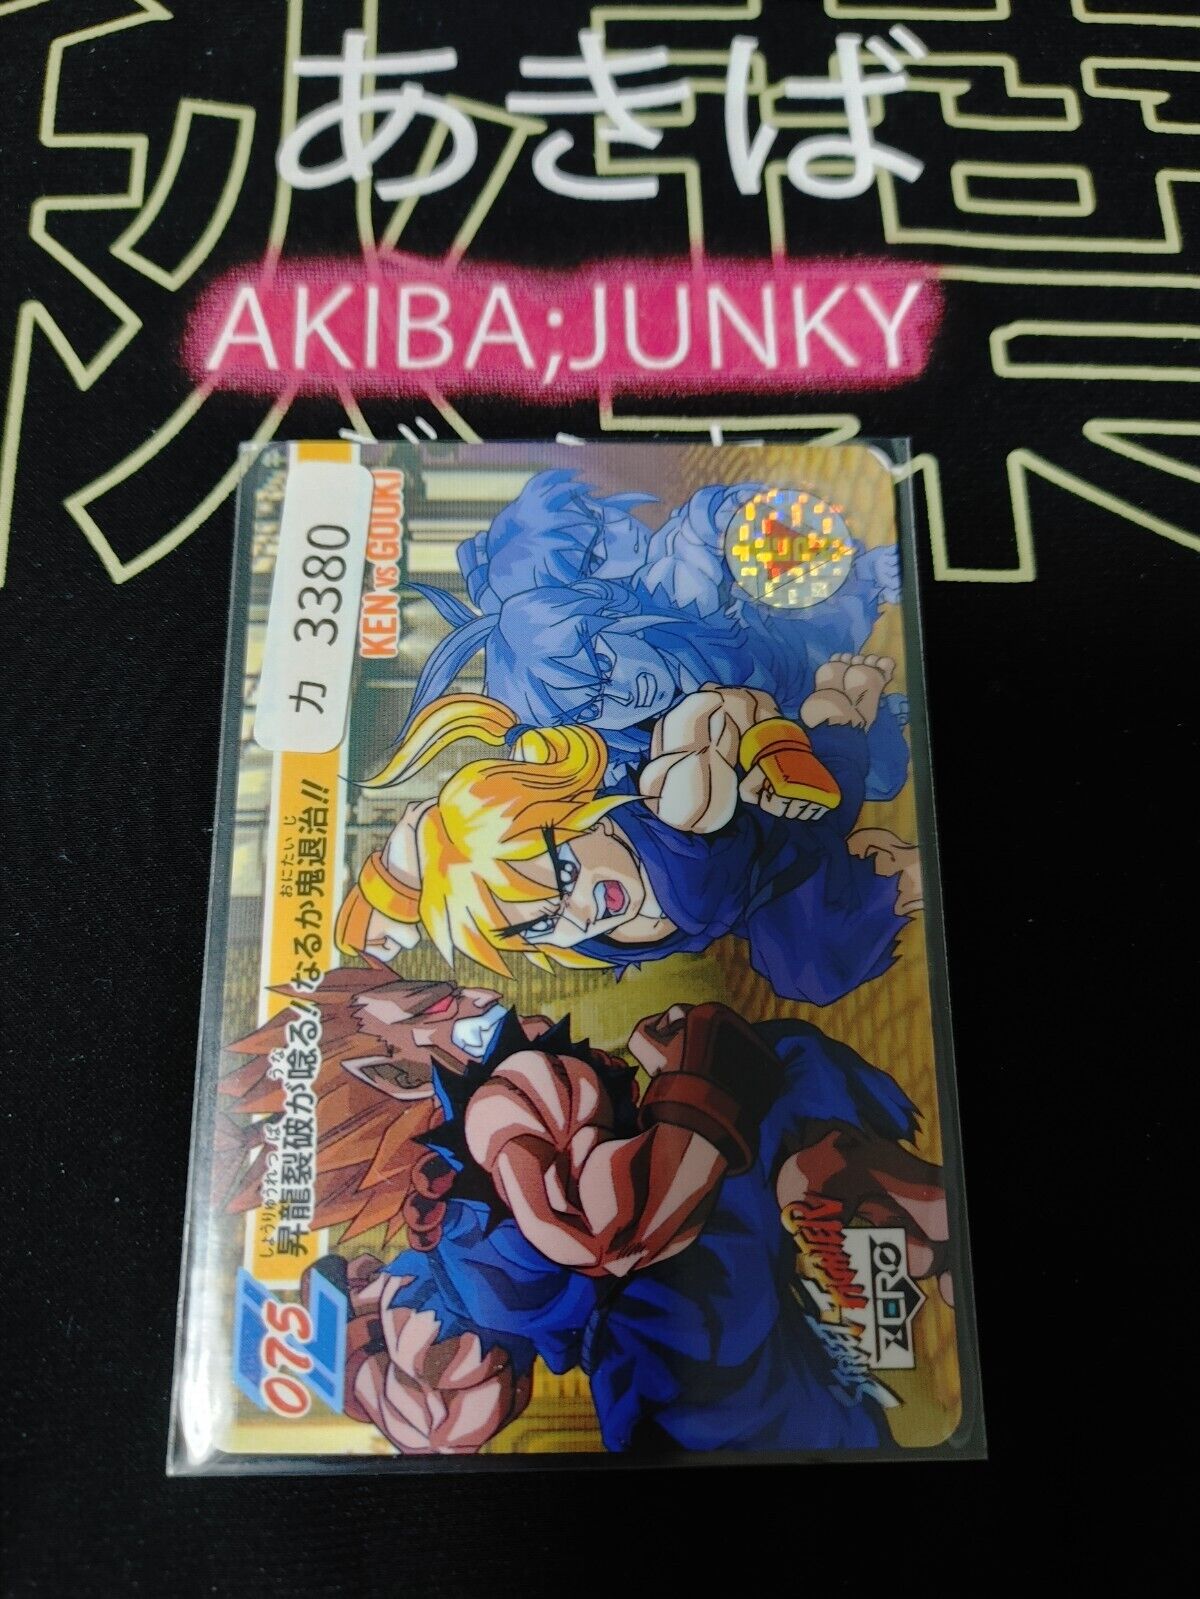 Street Fighter Zero Ken Gouki Carddass Card 075 Vintage Japan